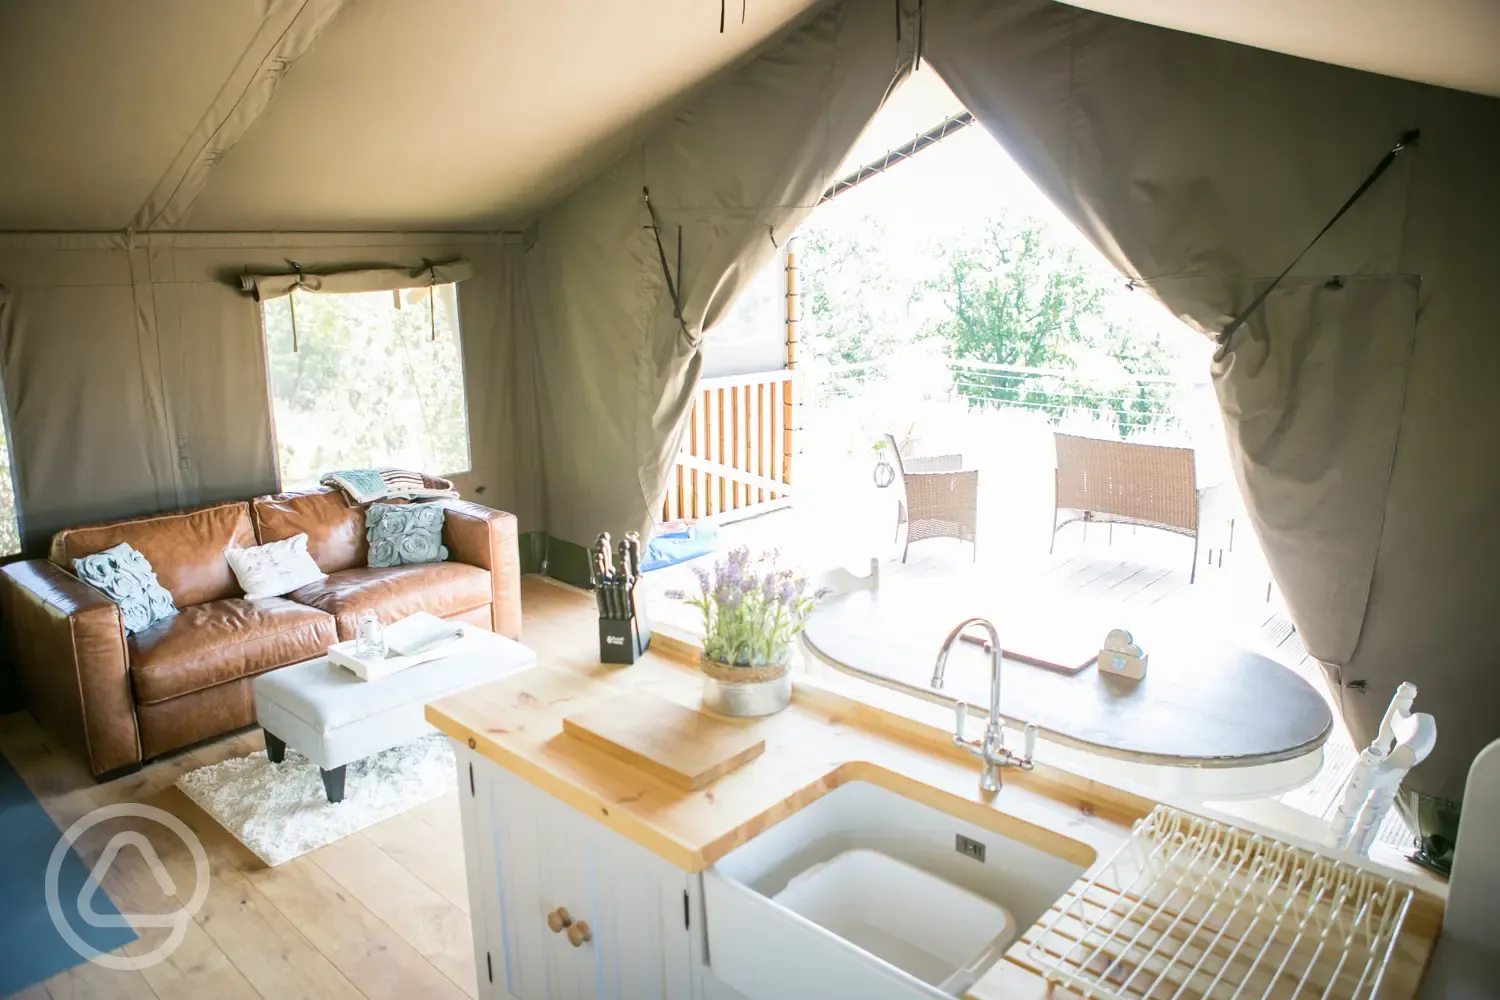 Inside kitchen area of Safari tent 